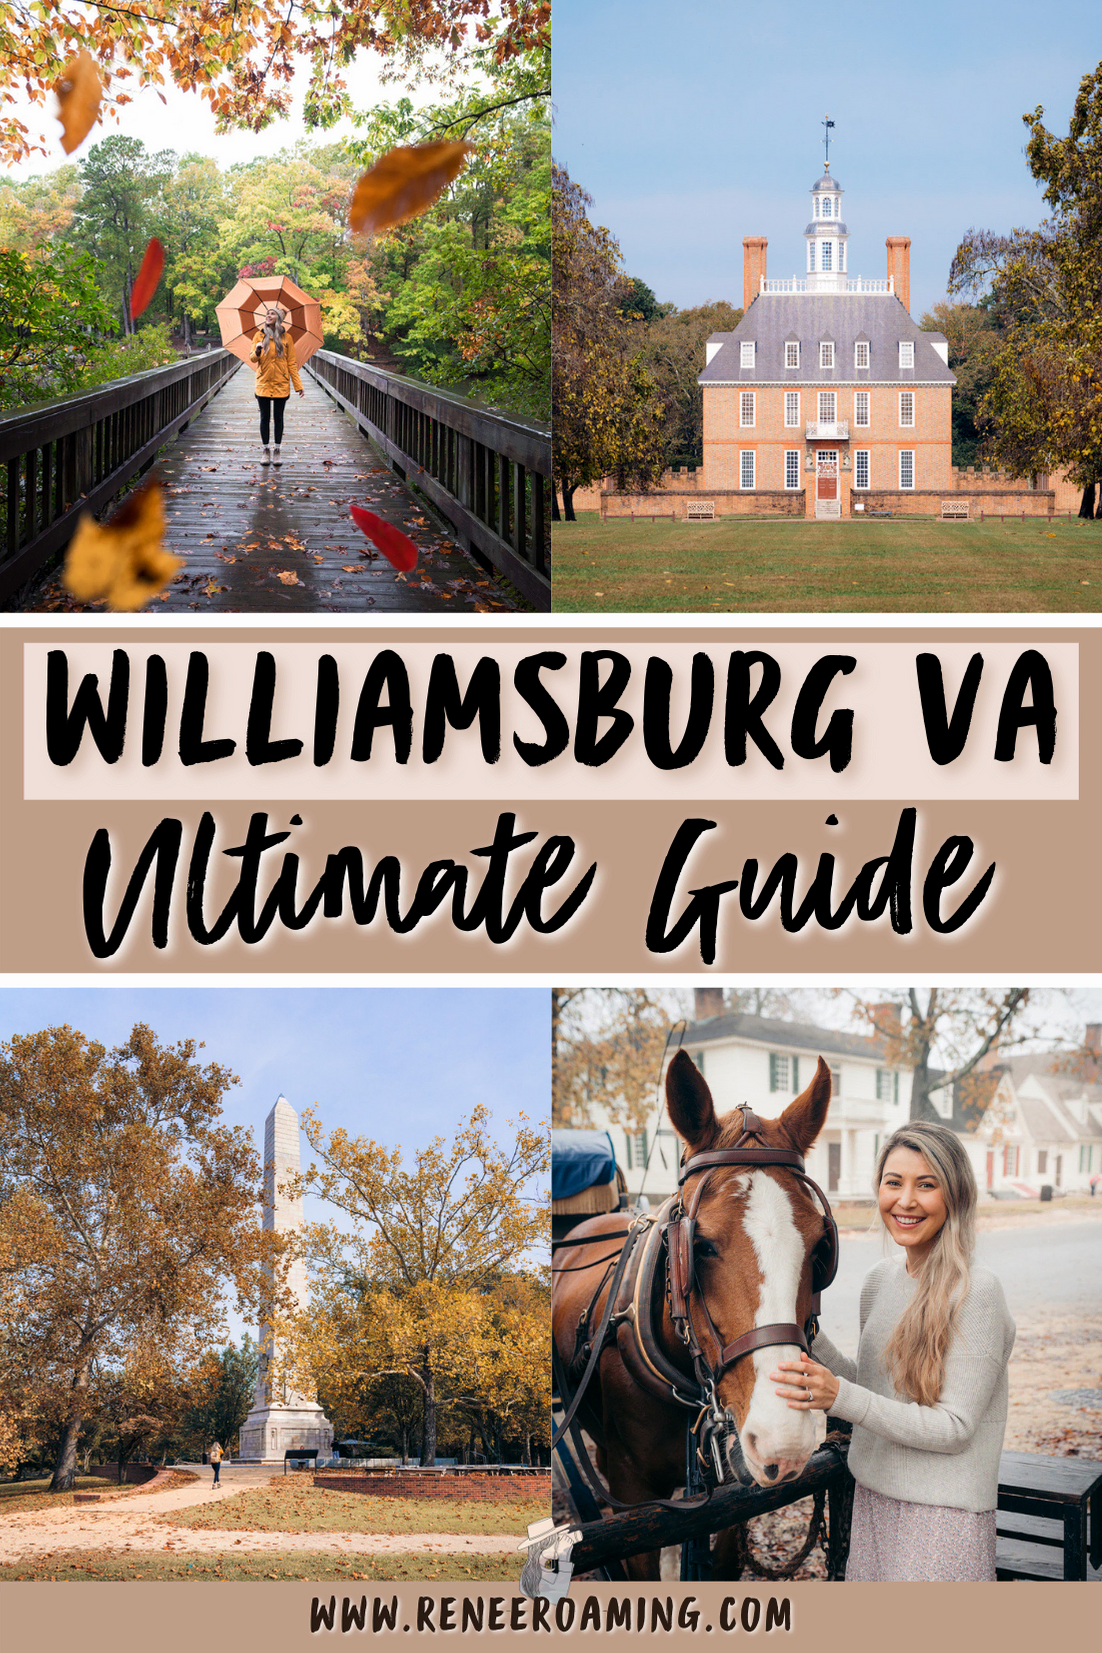 Williamsburg Virginia Guide and Itinerary